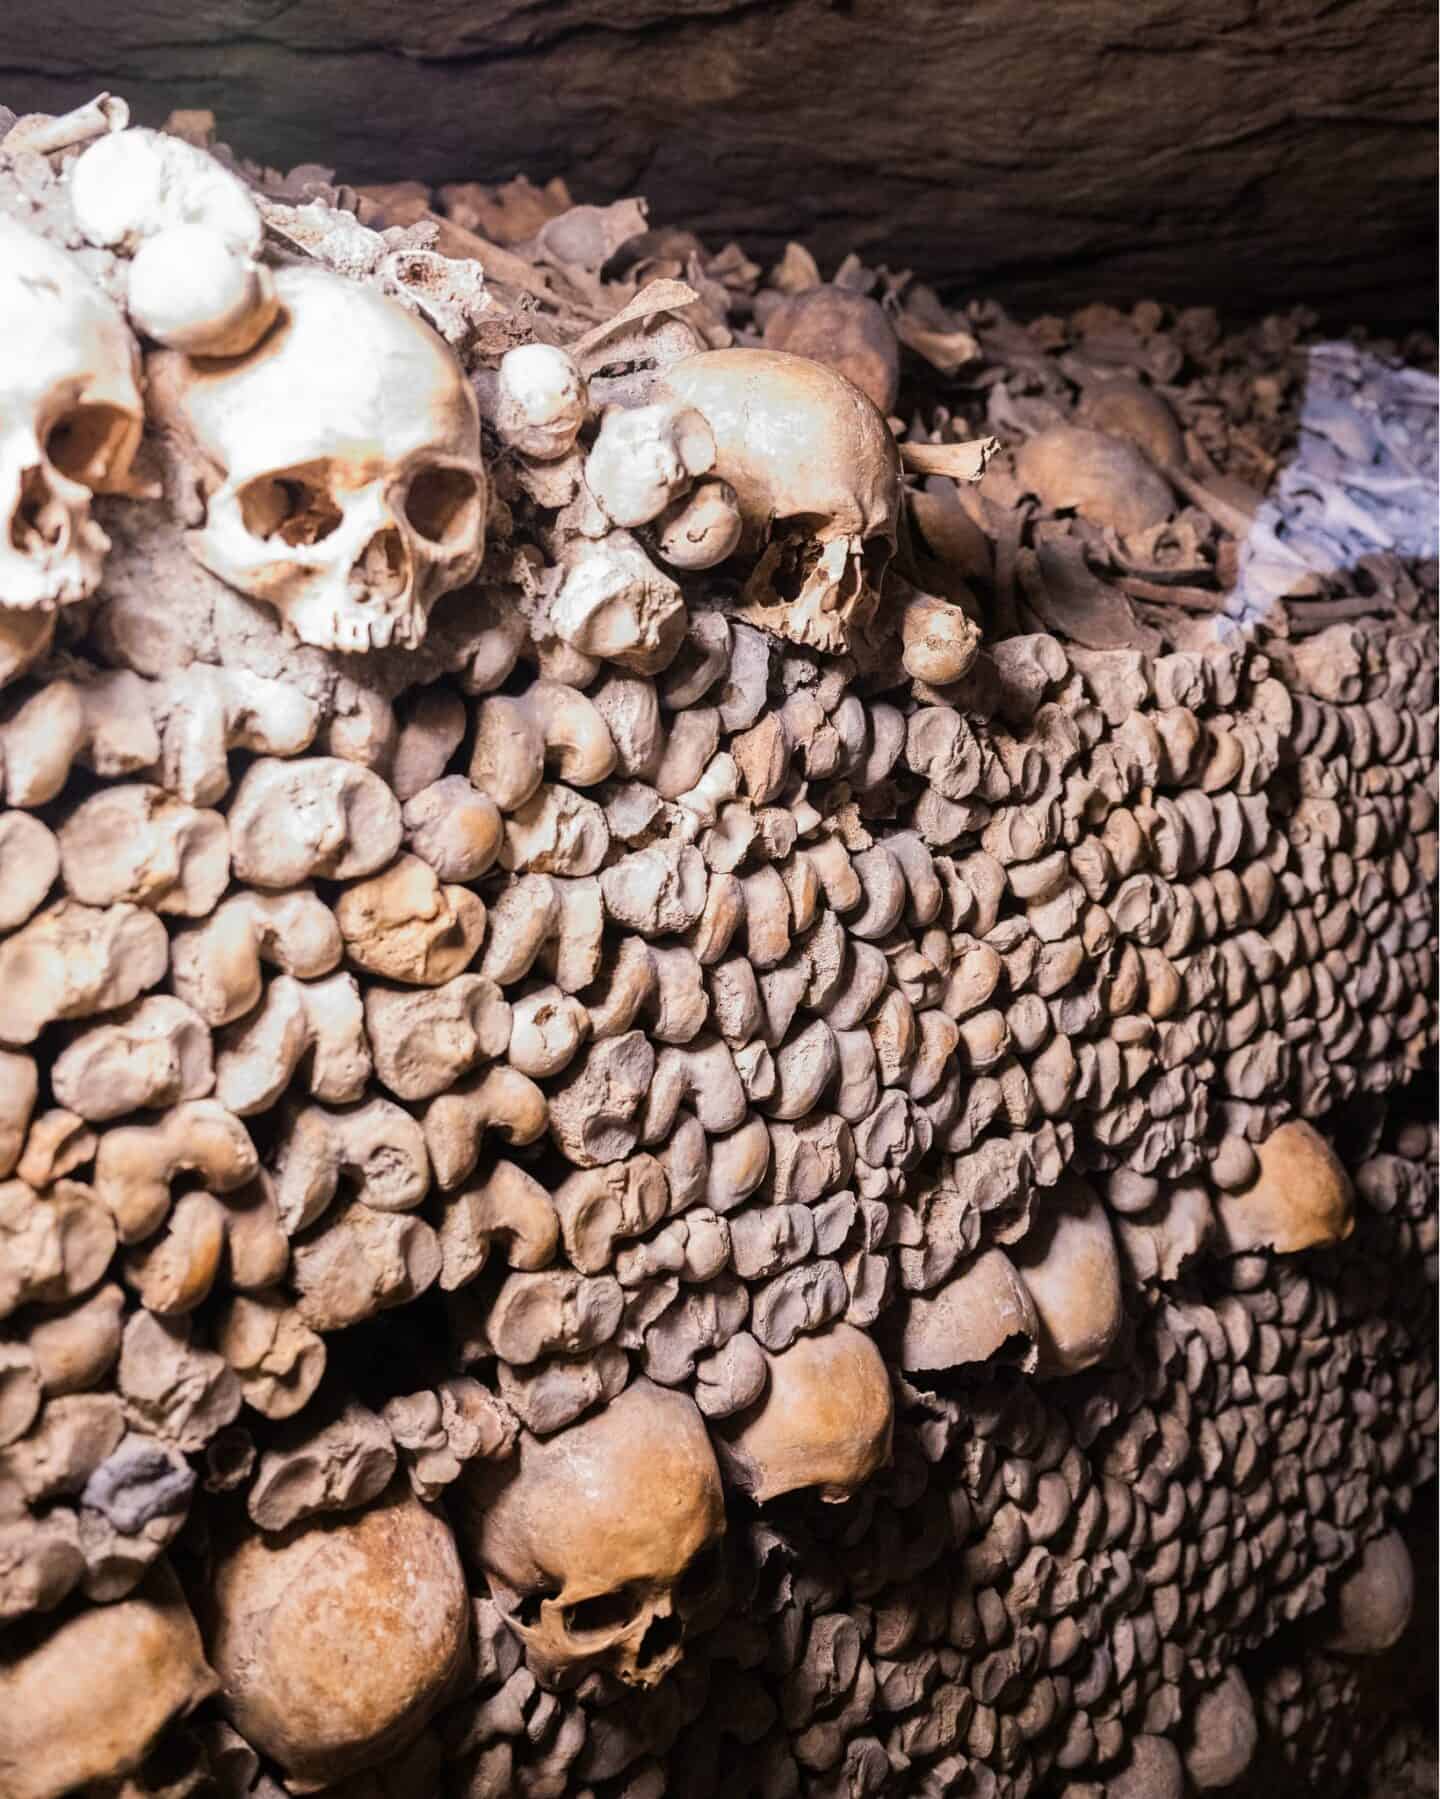 Closeup of the Catacombs of Paris bones